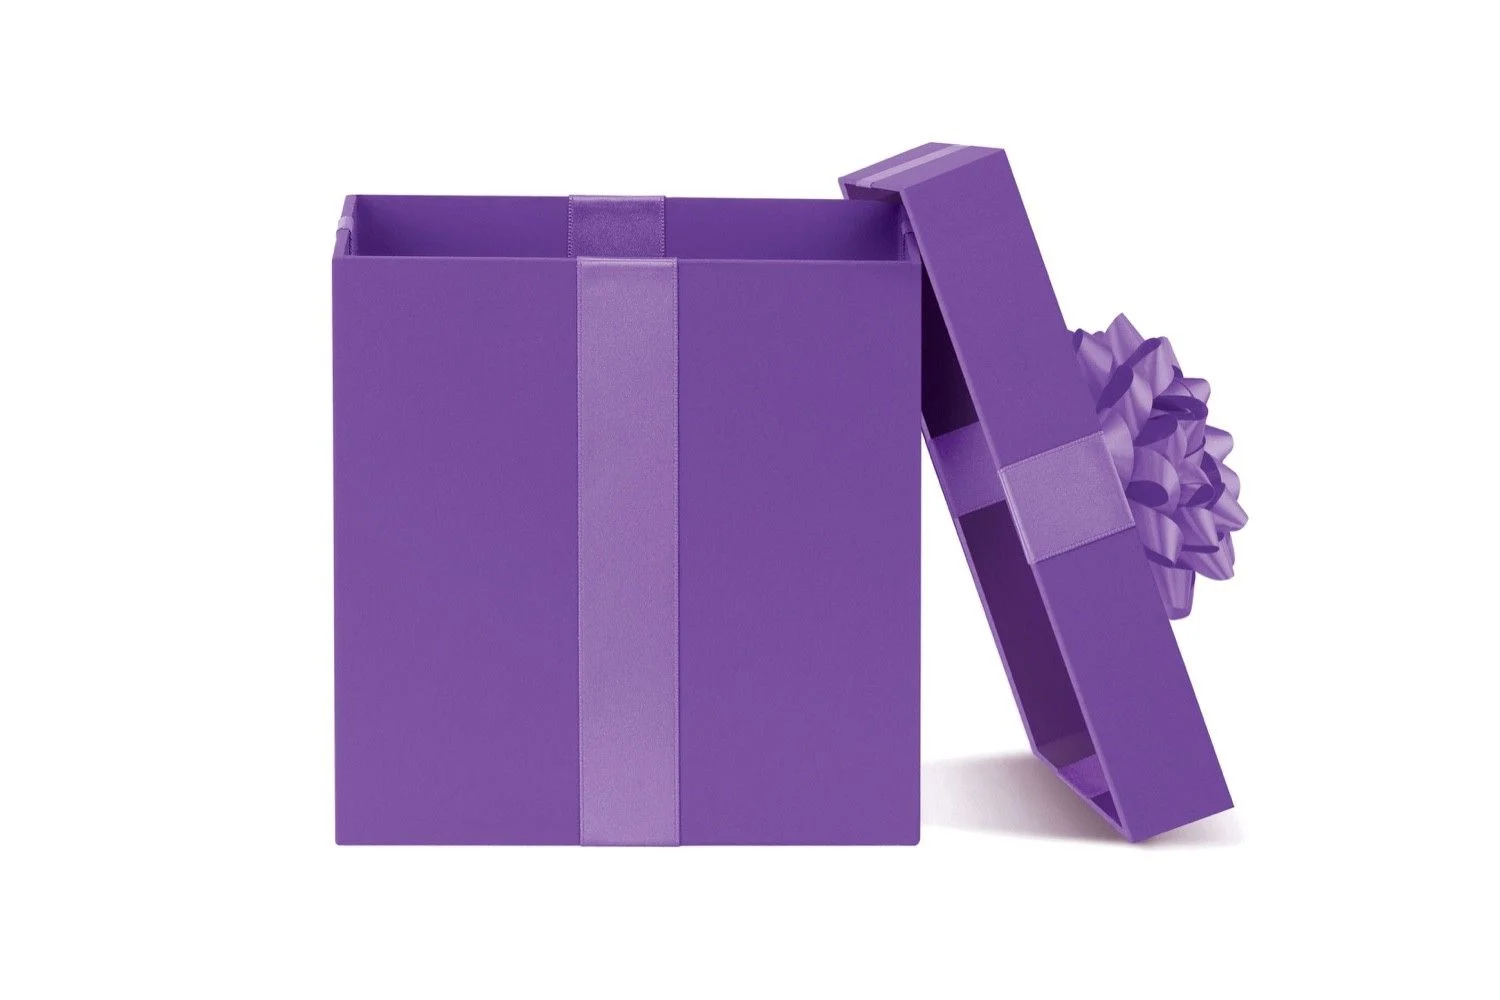 An open purple gift box.